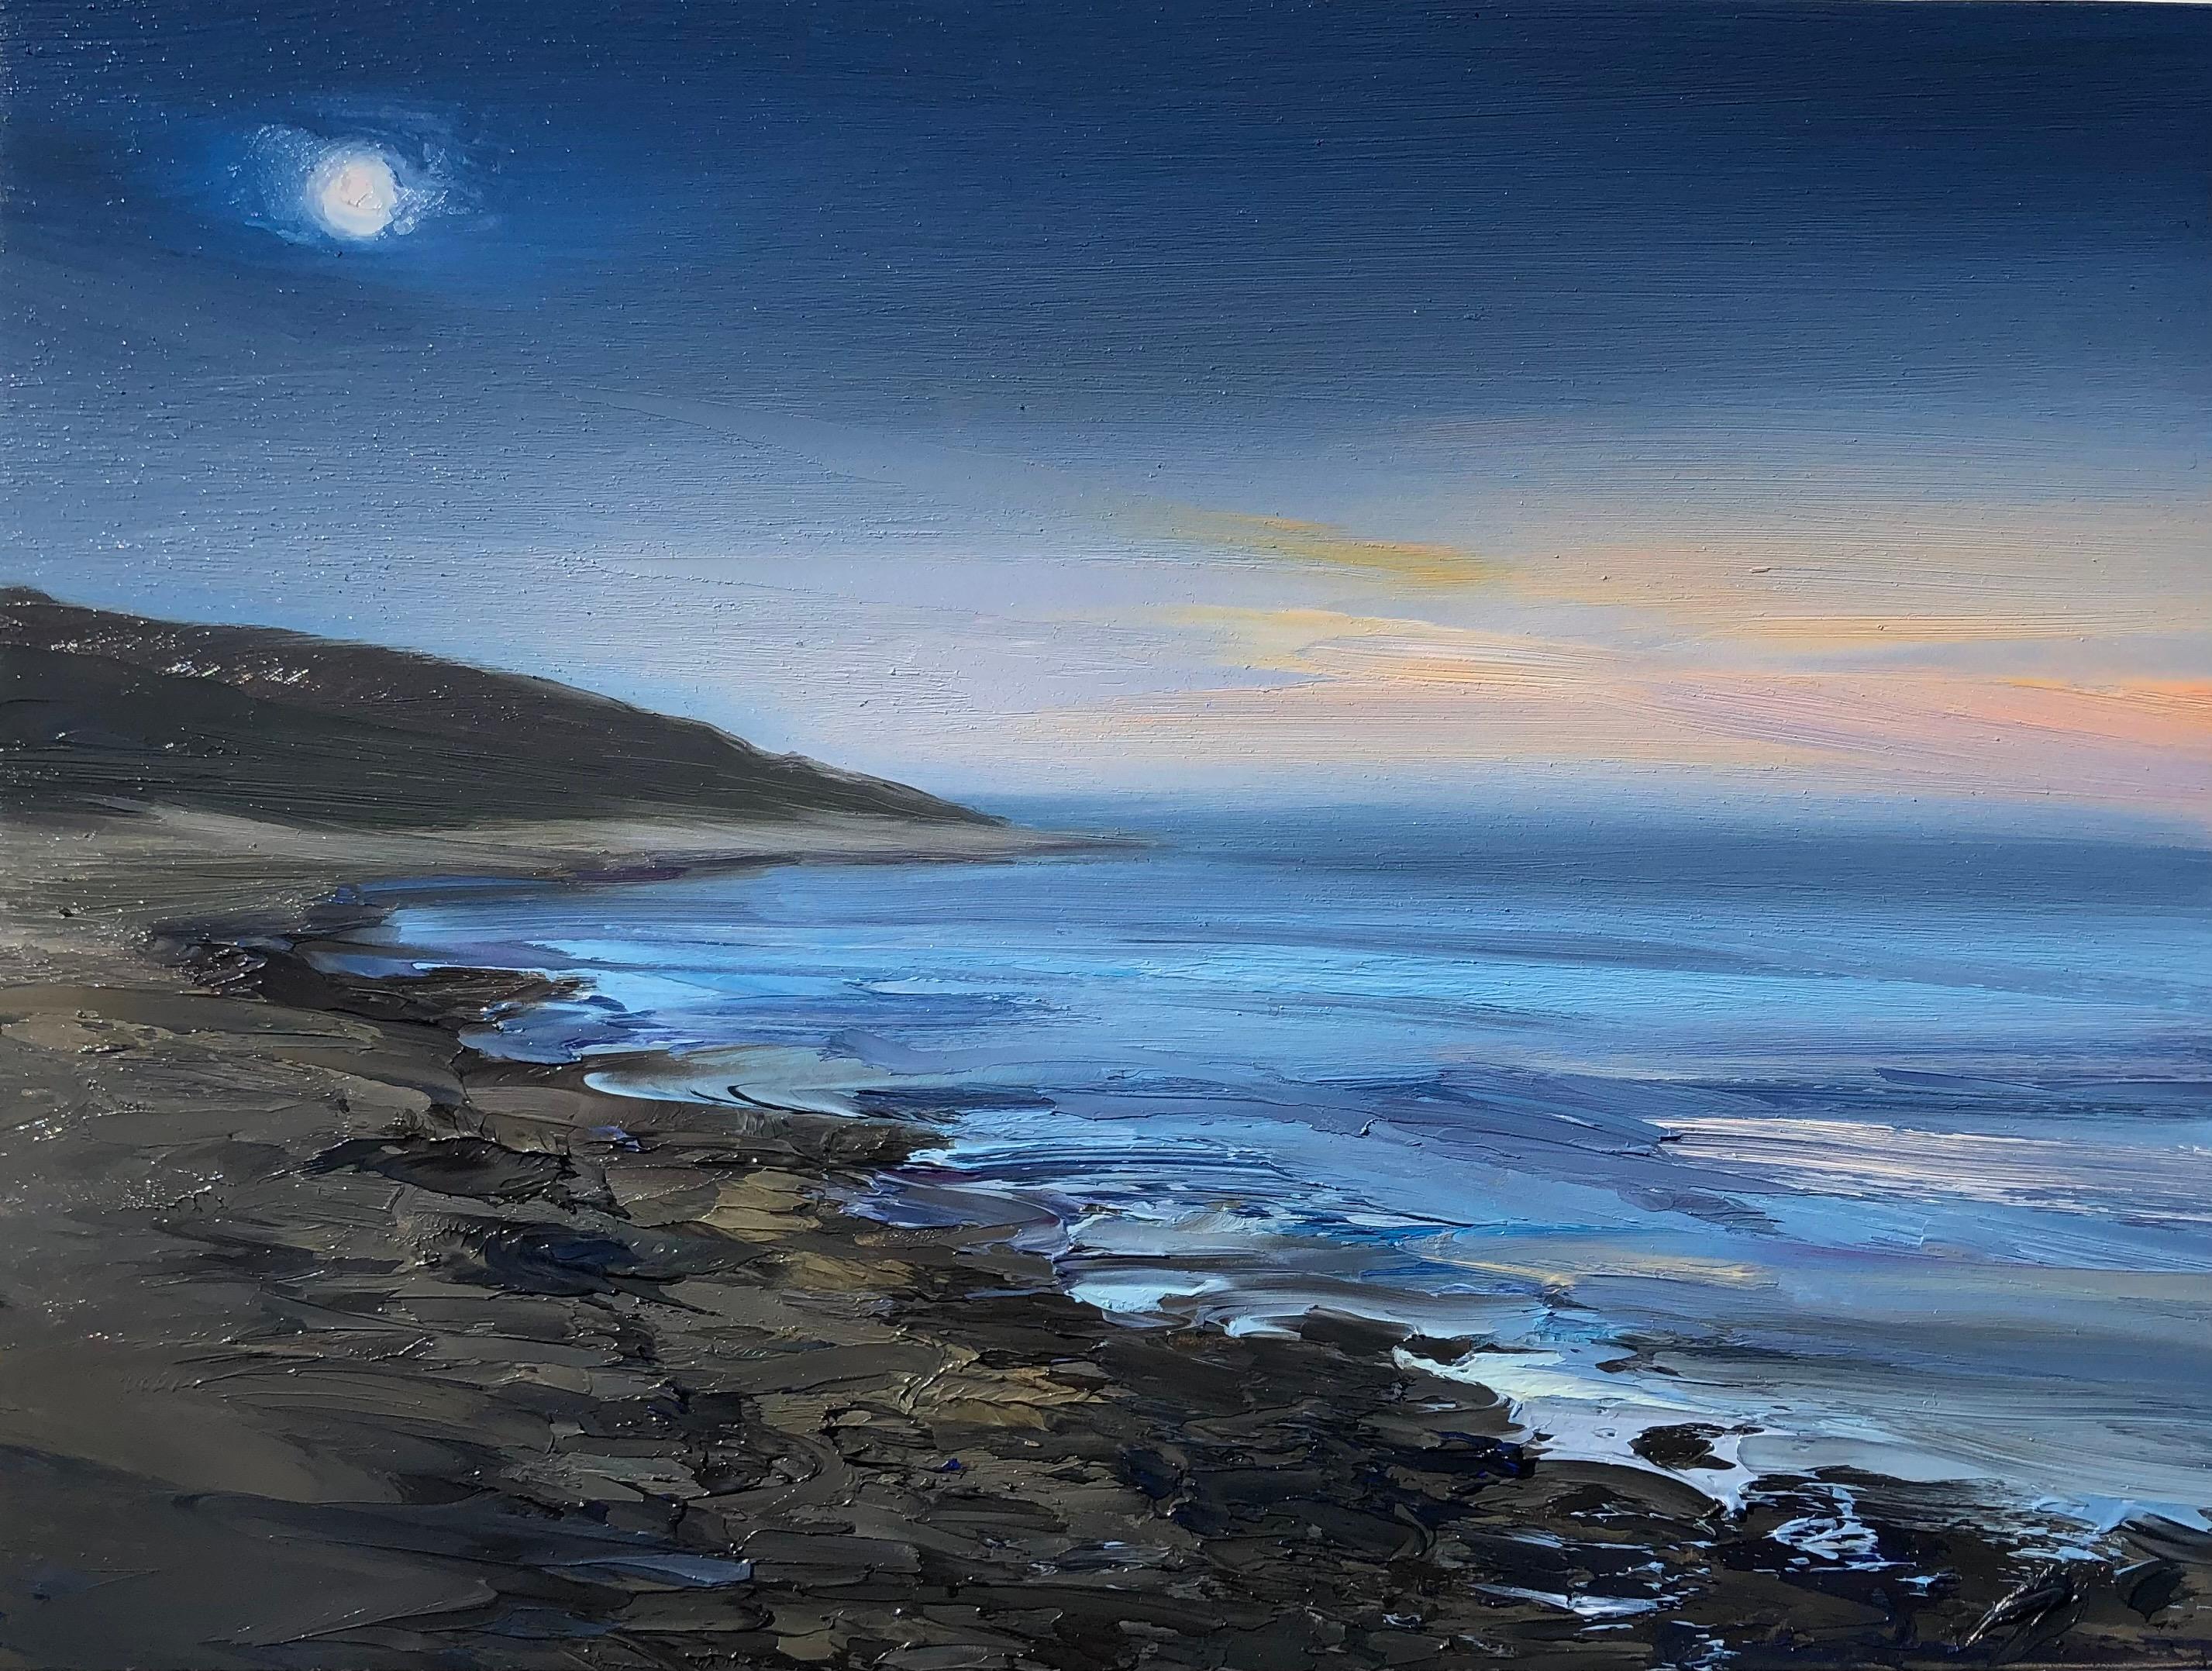 Whitney Knapp Landscape Painting - "Moonrise at Dusk" oil painting of a night sky over shoreline on beach